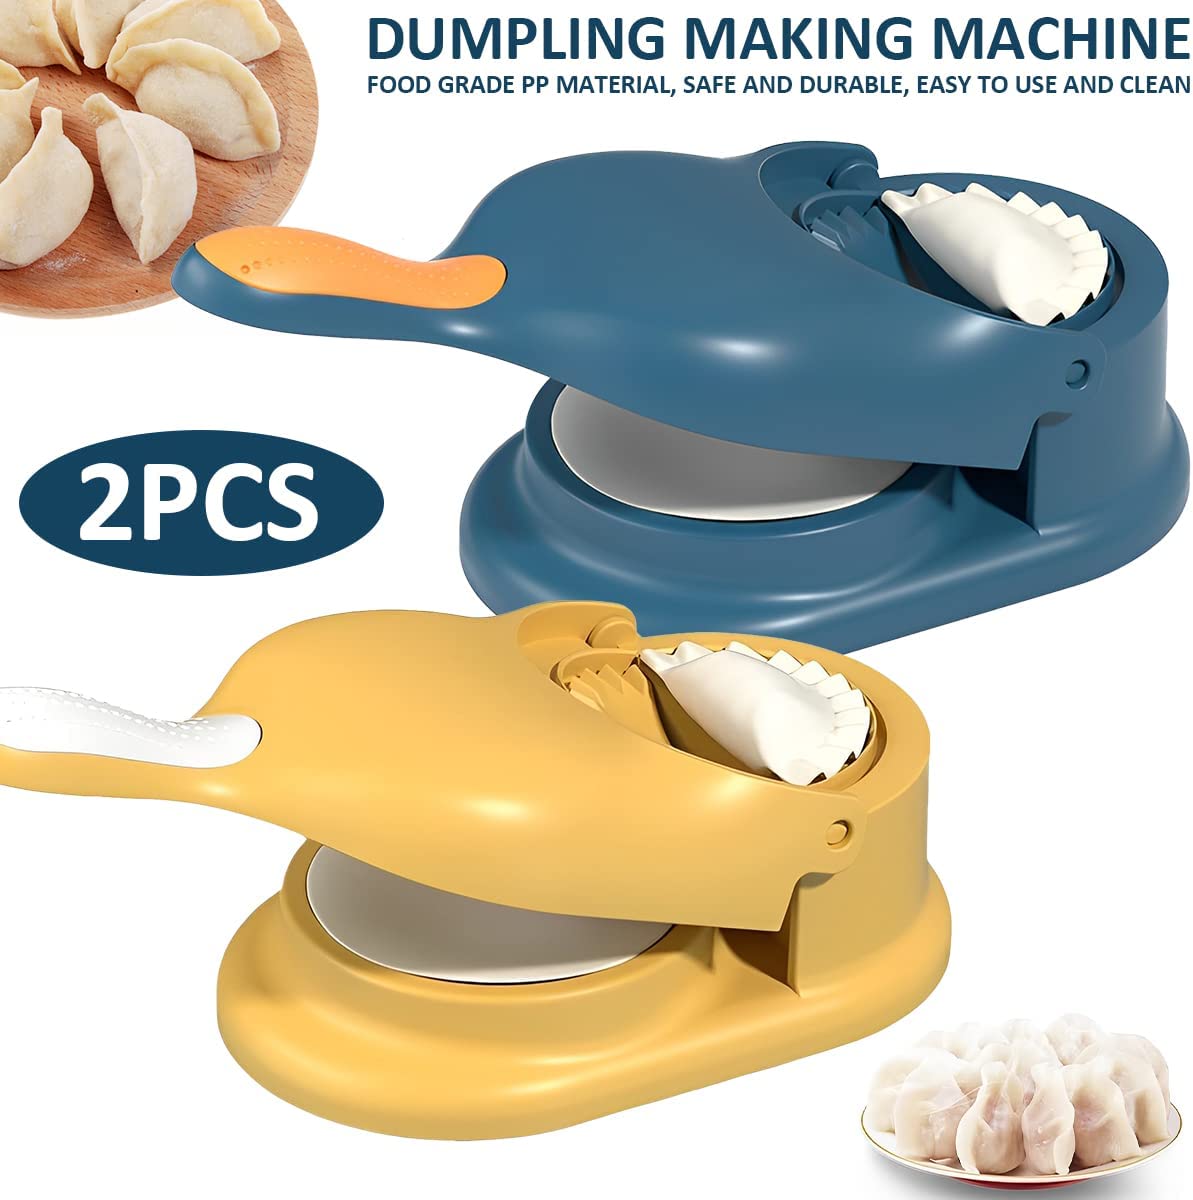 2 in 1 Dumpling Maker - Elements4Life